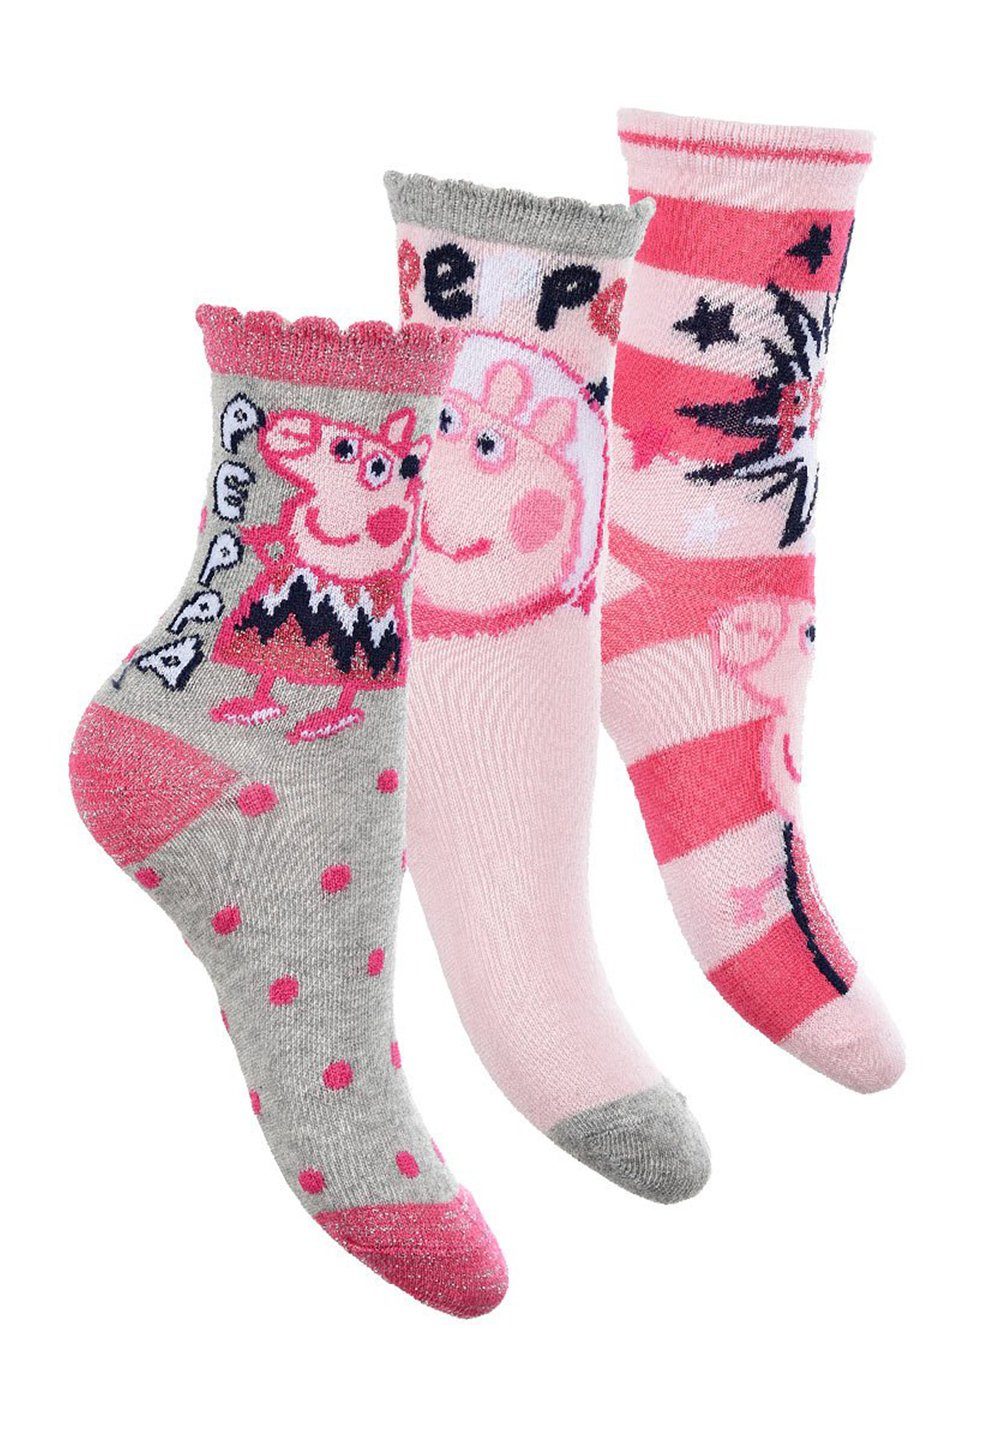 Peppa Pig Socken Kinder Wutz Peppa Paket Socken Strümpfe Mädchen (6-Paar)